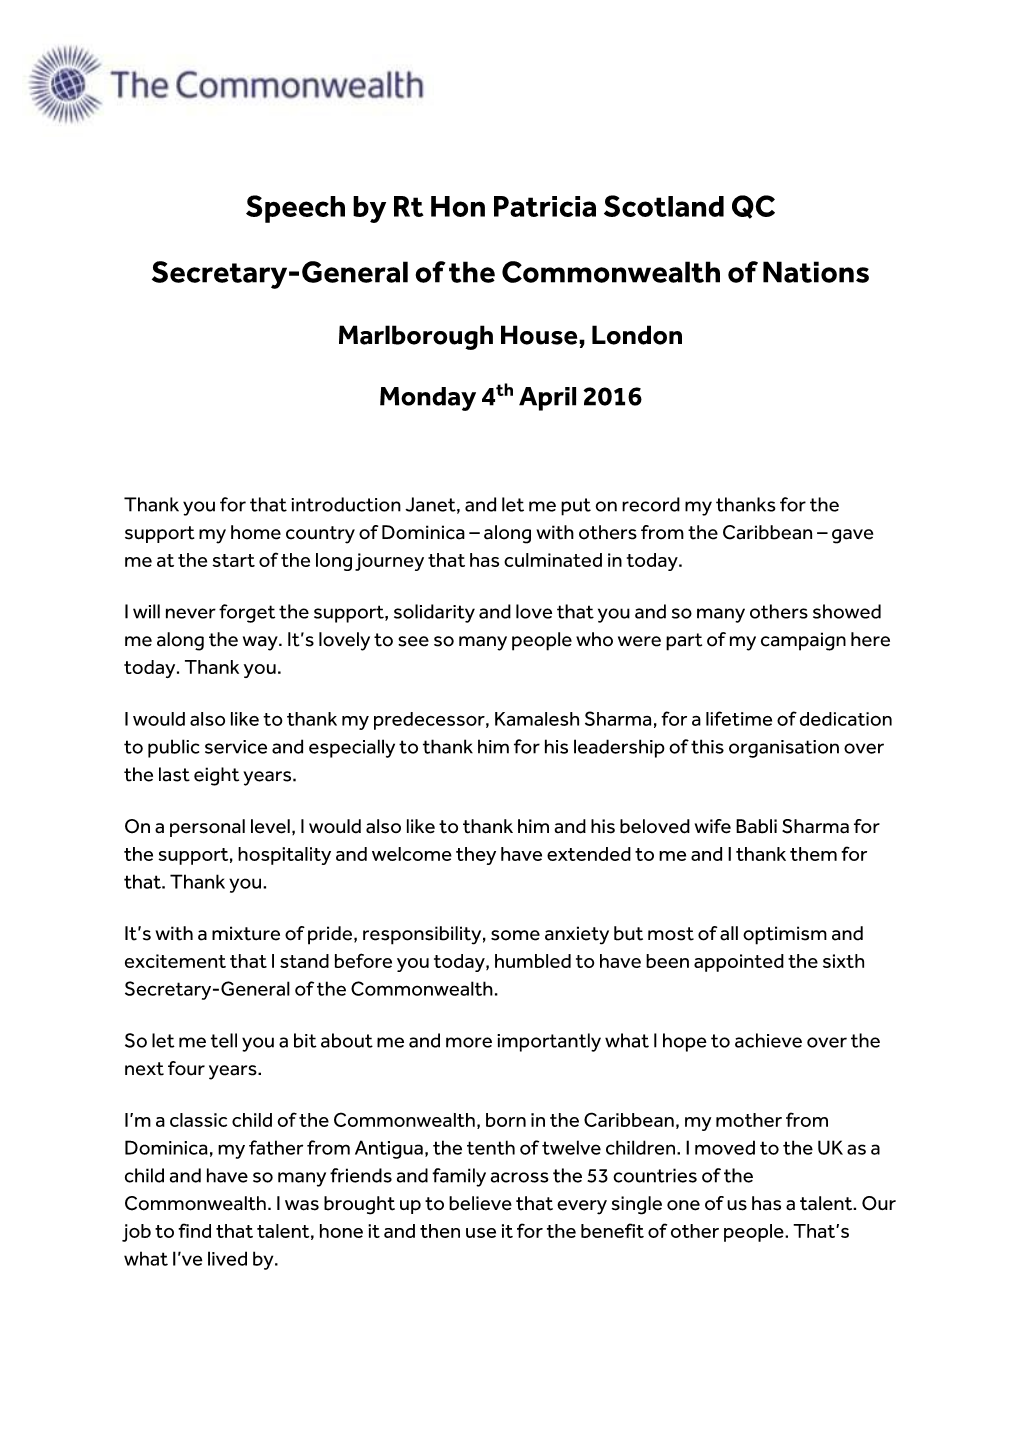 Speech by Rt Hon Patricia Scotland QC Secretary-General of The